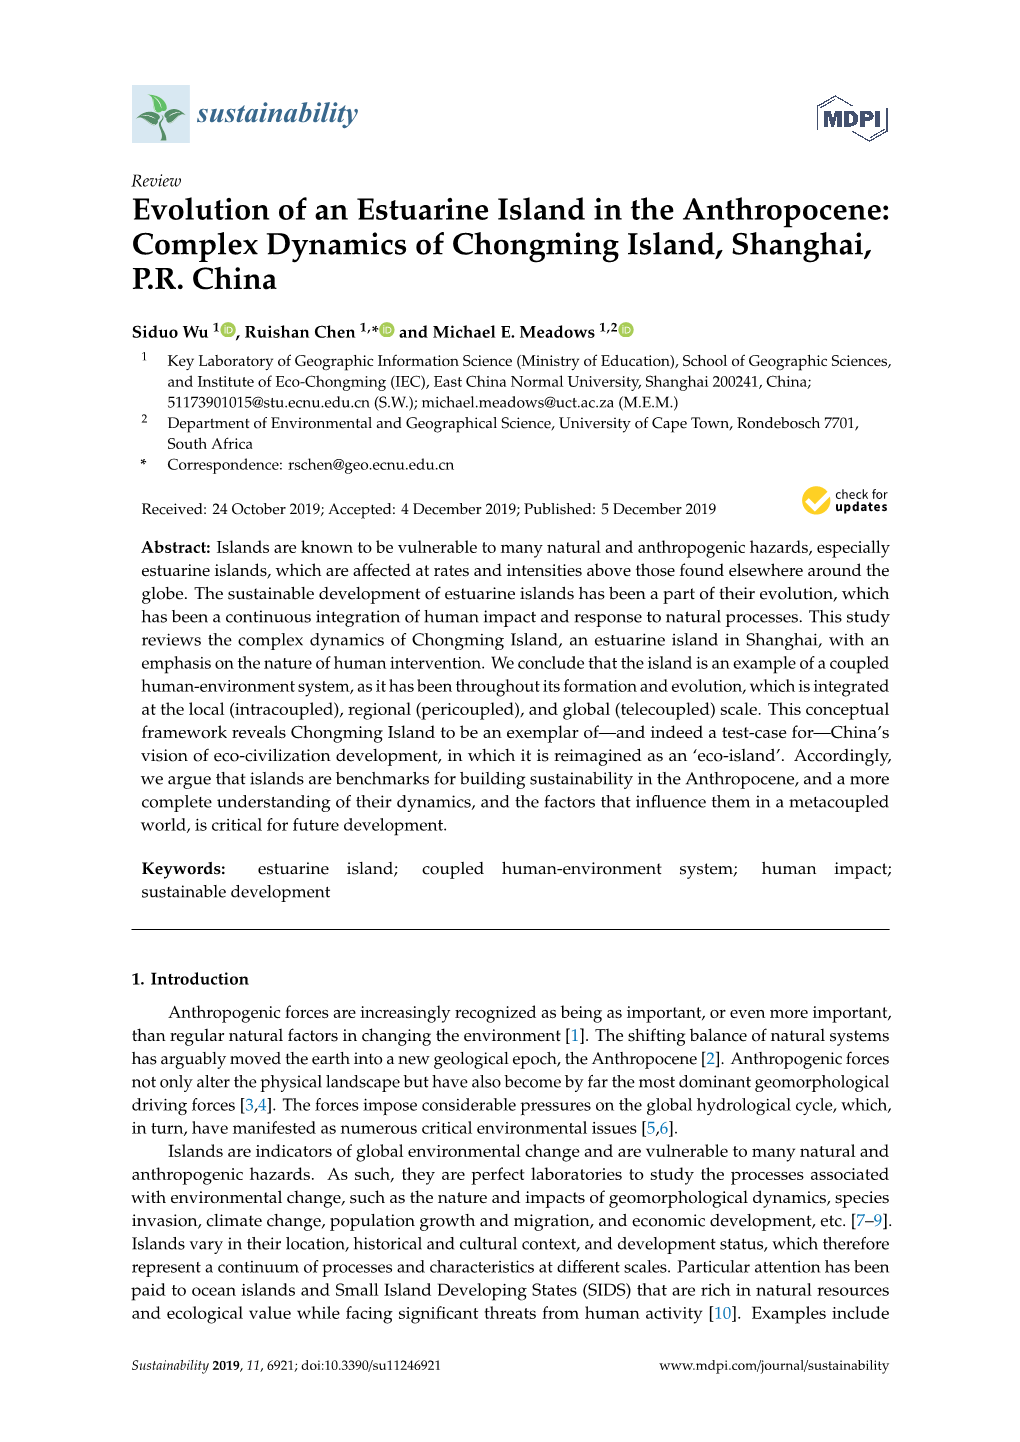 Evolution of an Estuarine Island in the Anthropocene: Complex Dynamics of Chongming Island, Shanghai, P.R